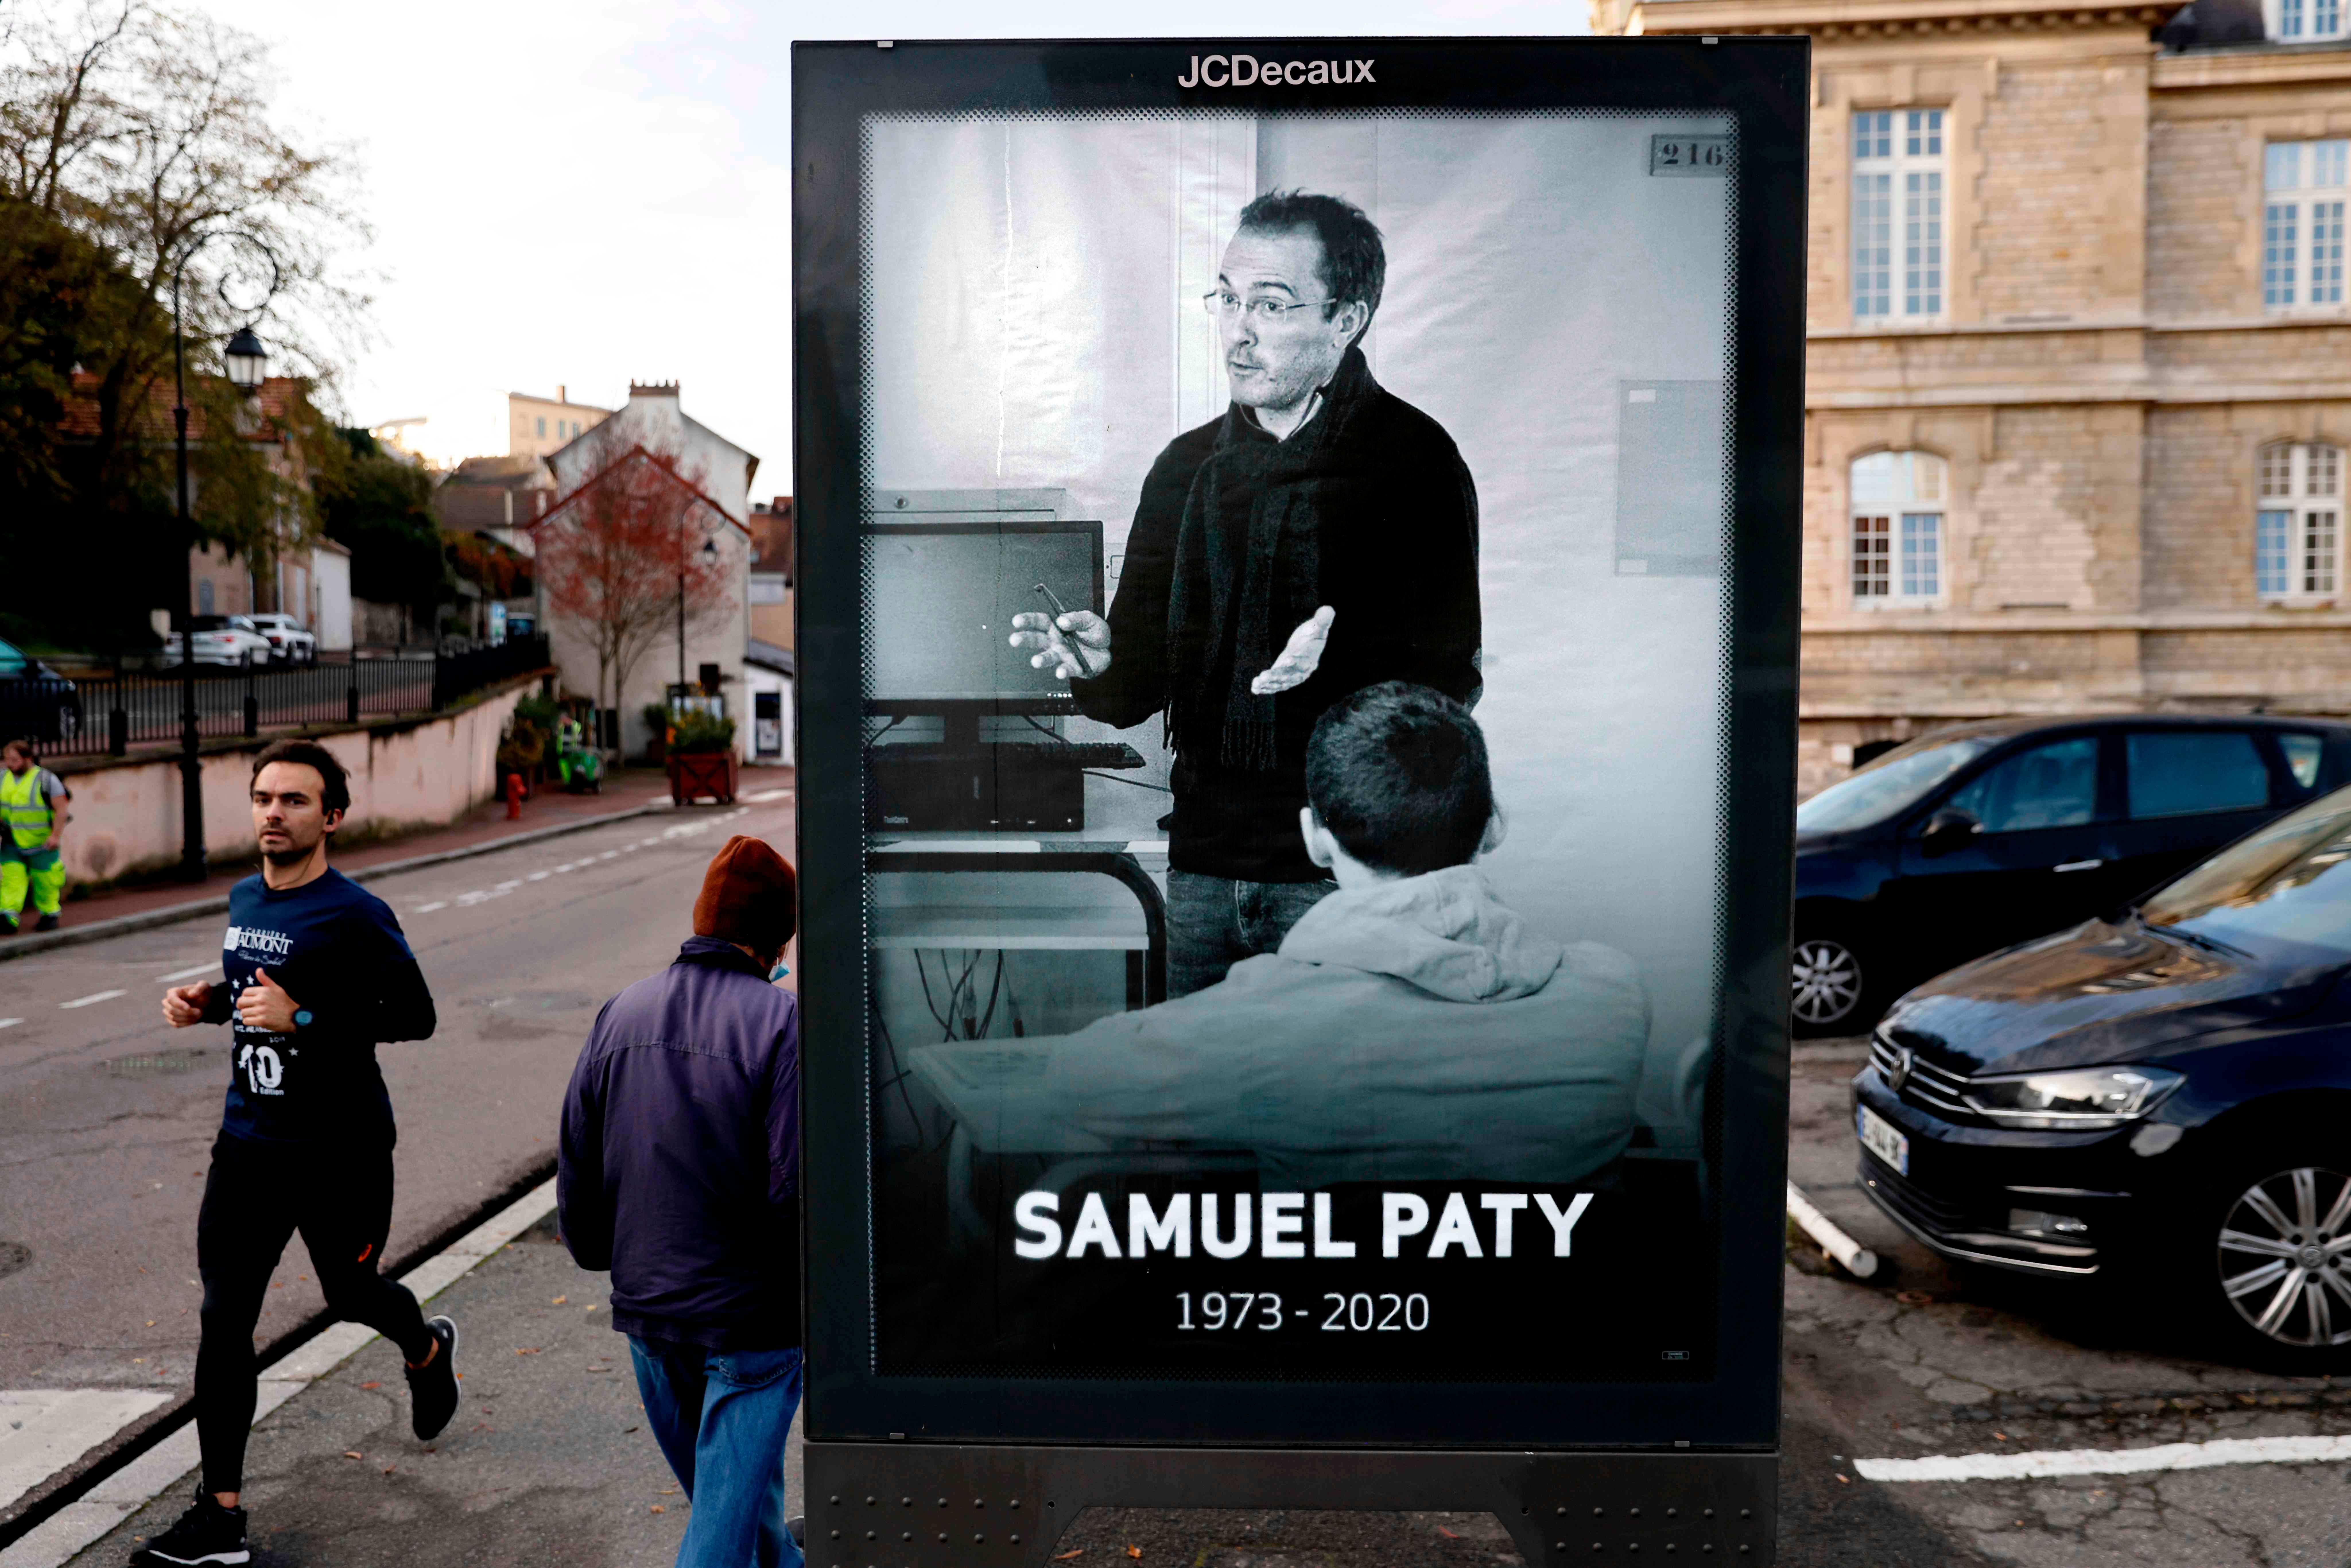 Samuel Paty was beheaded in a Parisian suburb last October